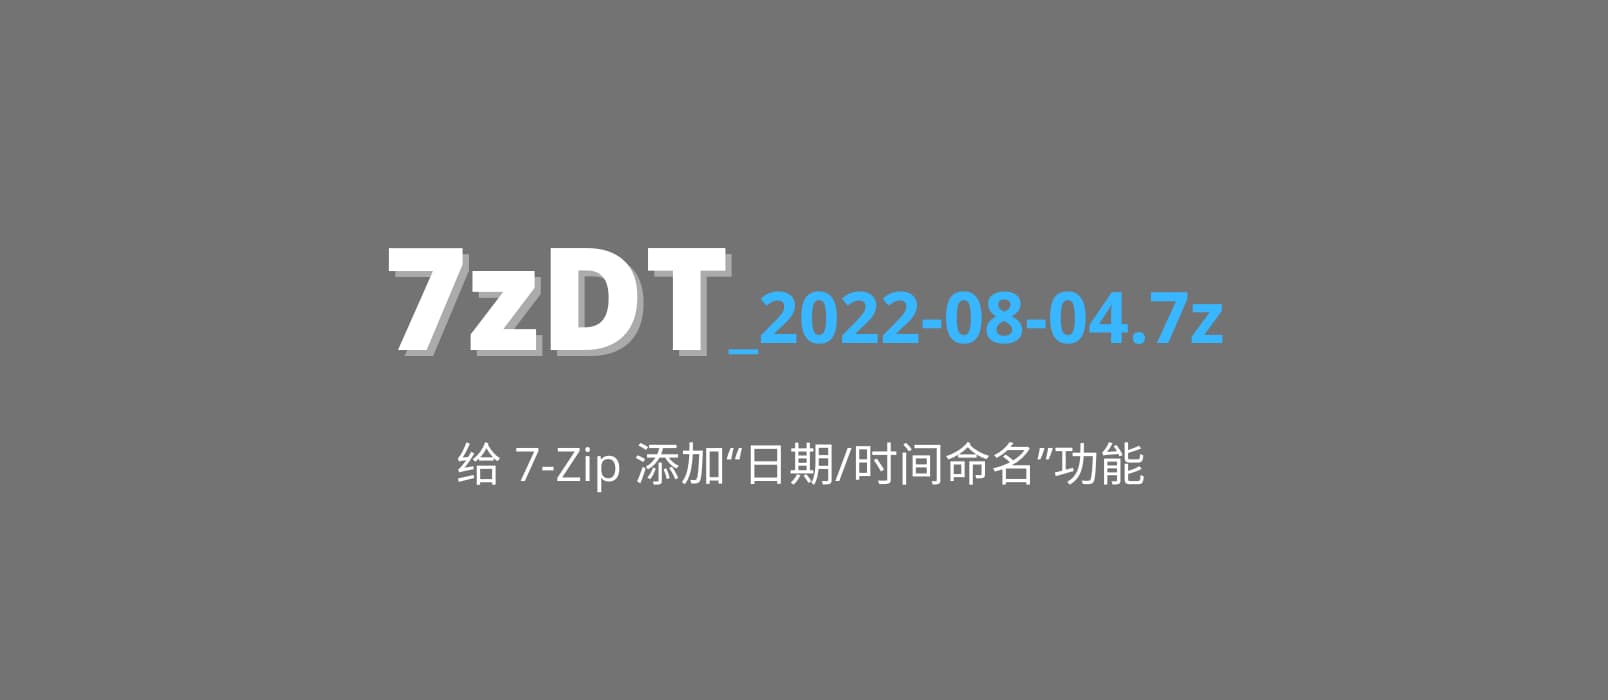 7zDT - 给 7-Zip 压缩界面添加“日期/时间命名”功能  